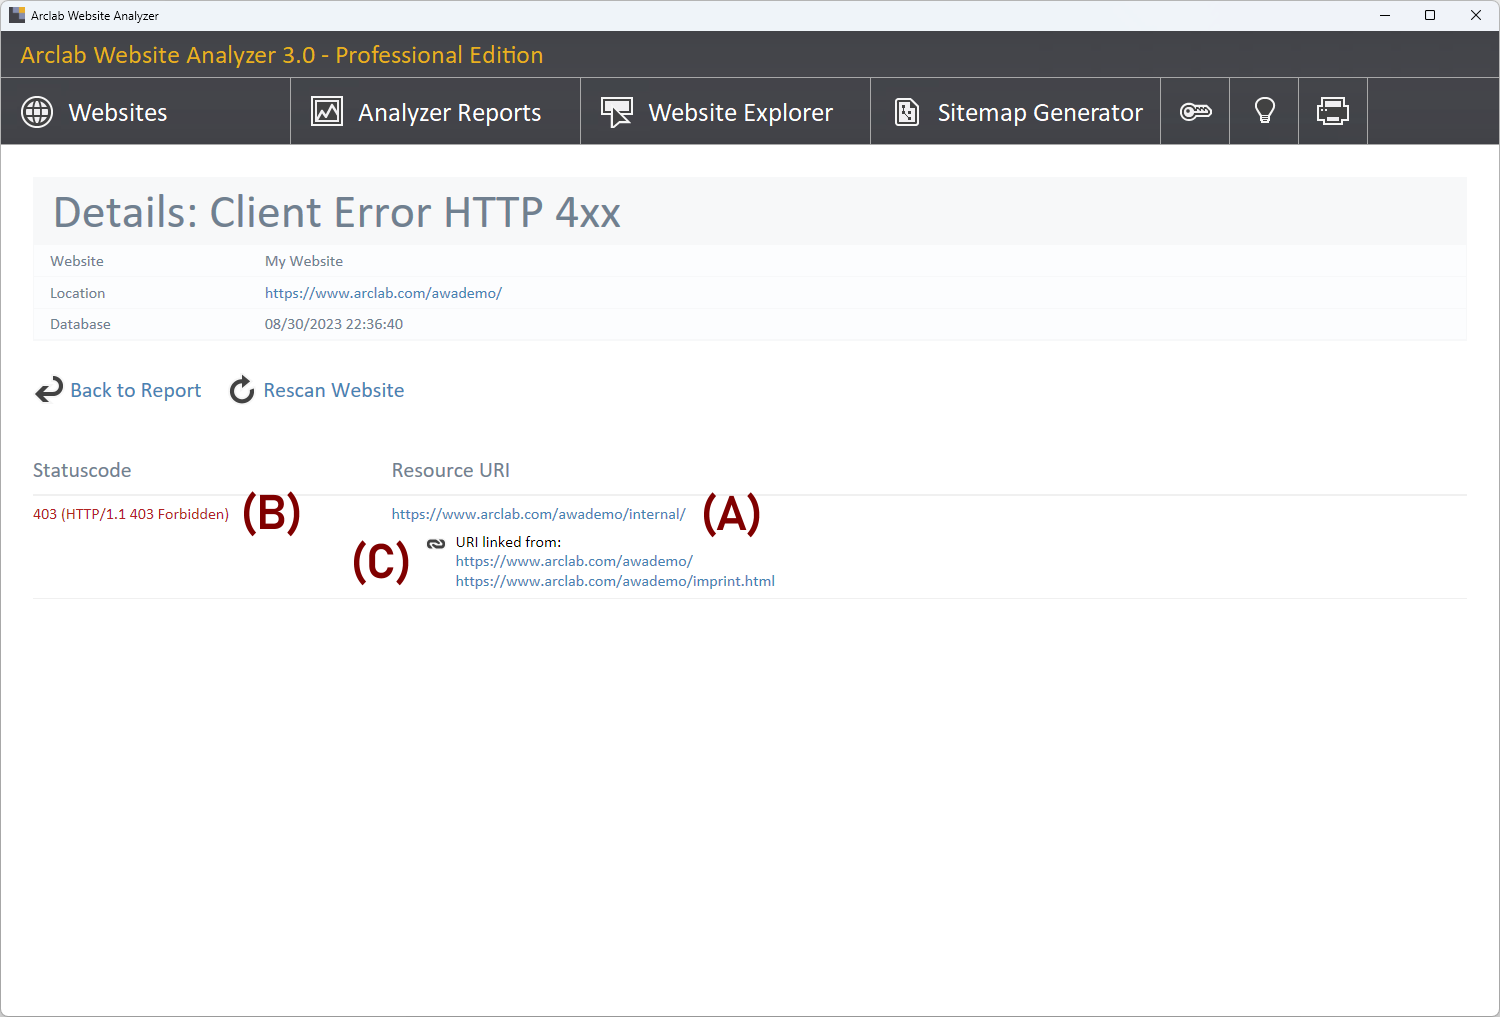 Details: Client Error HTTP 4xx